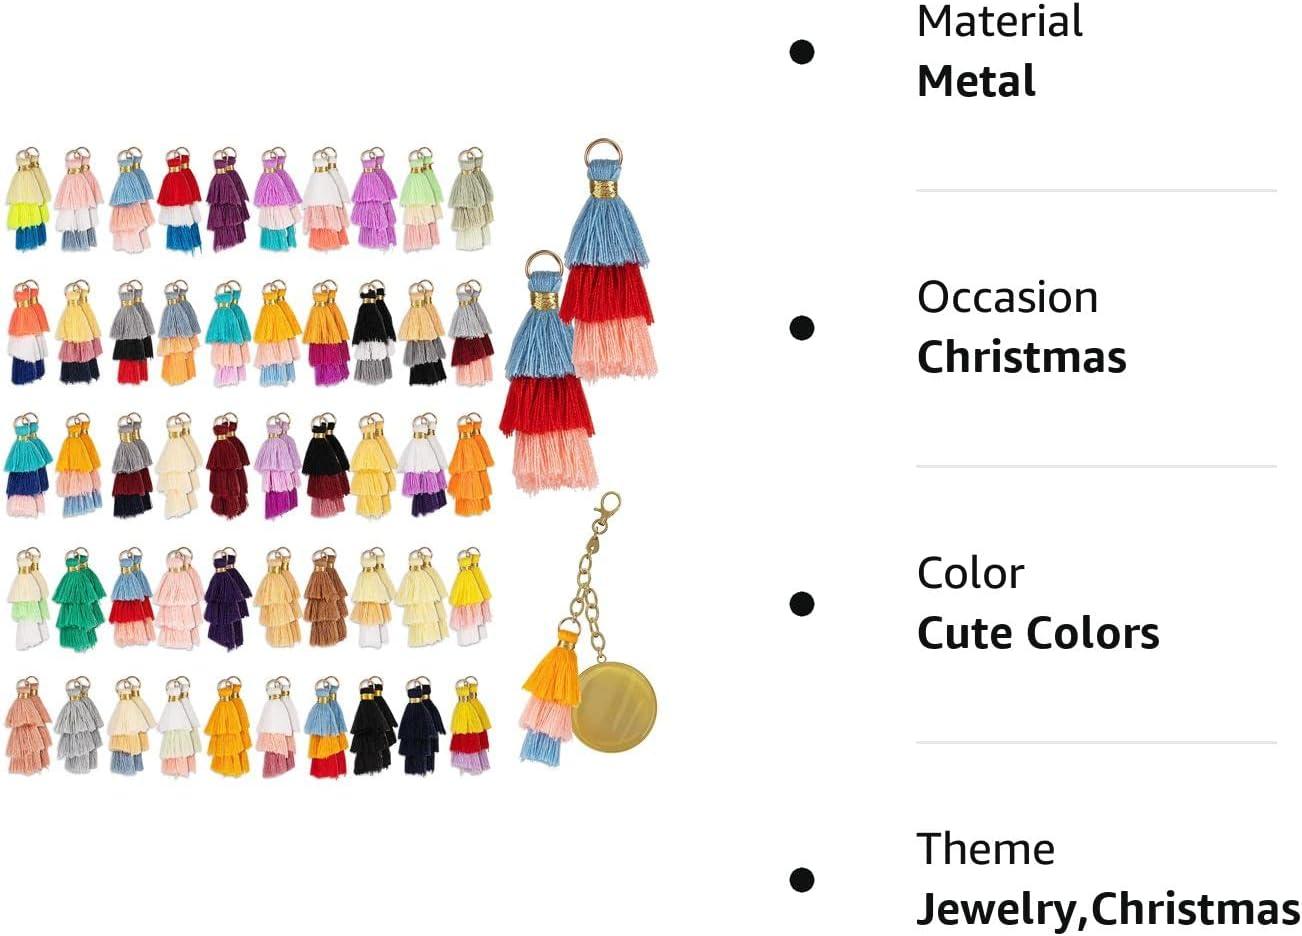 Mini Tassel Multi-Color Tiny Handmade Craft Tassels Soft Keychain